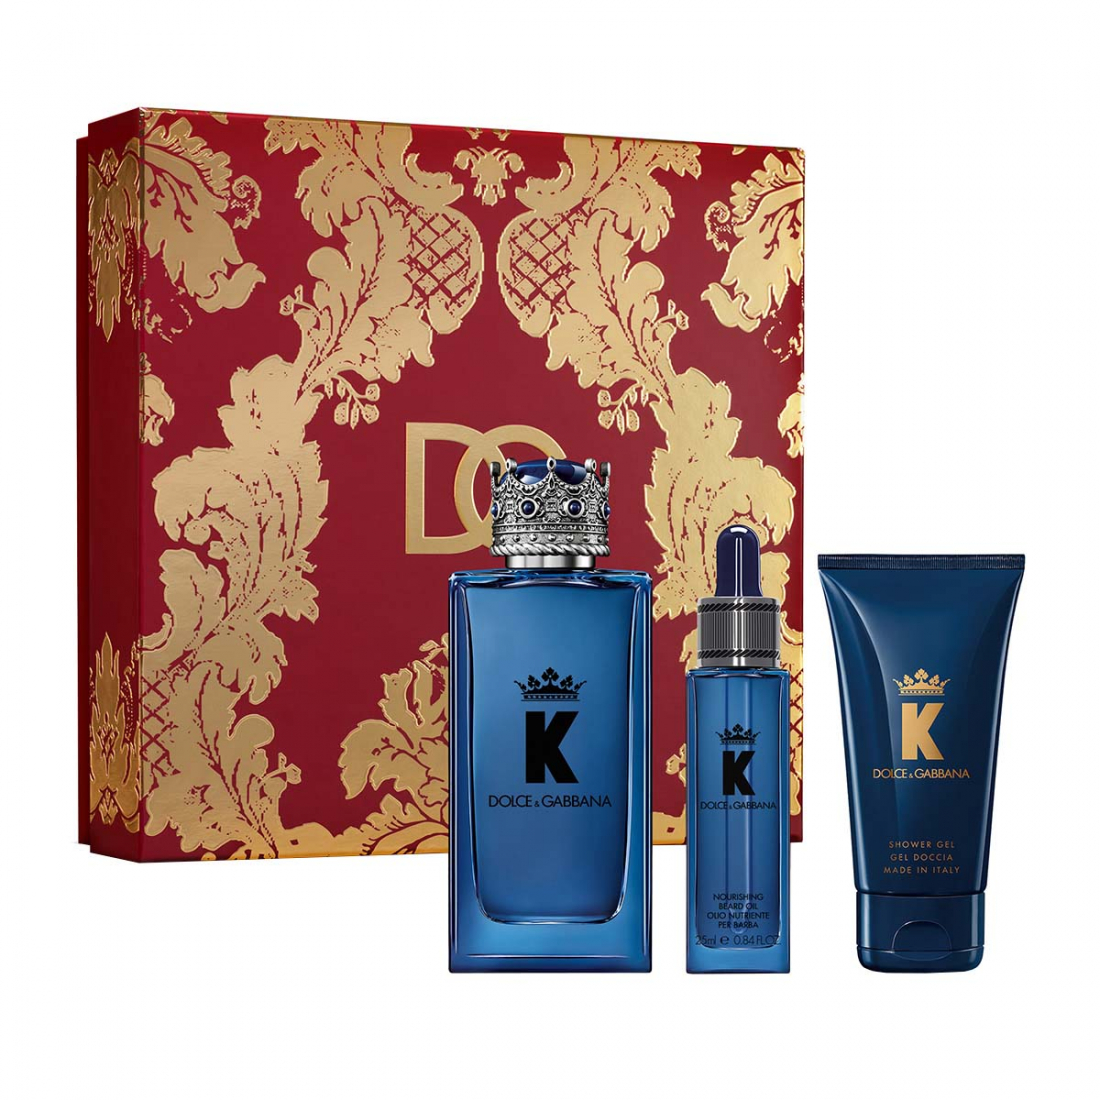 'K By Dolce & Gabbana' Parfüm Set - 3 Stücke